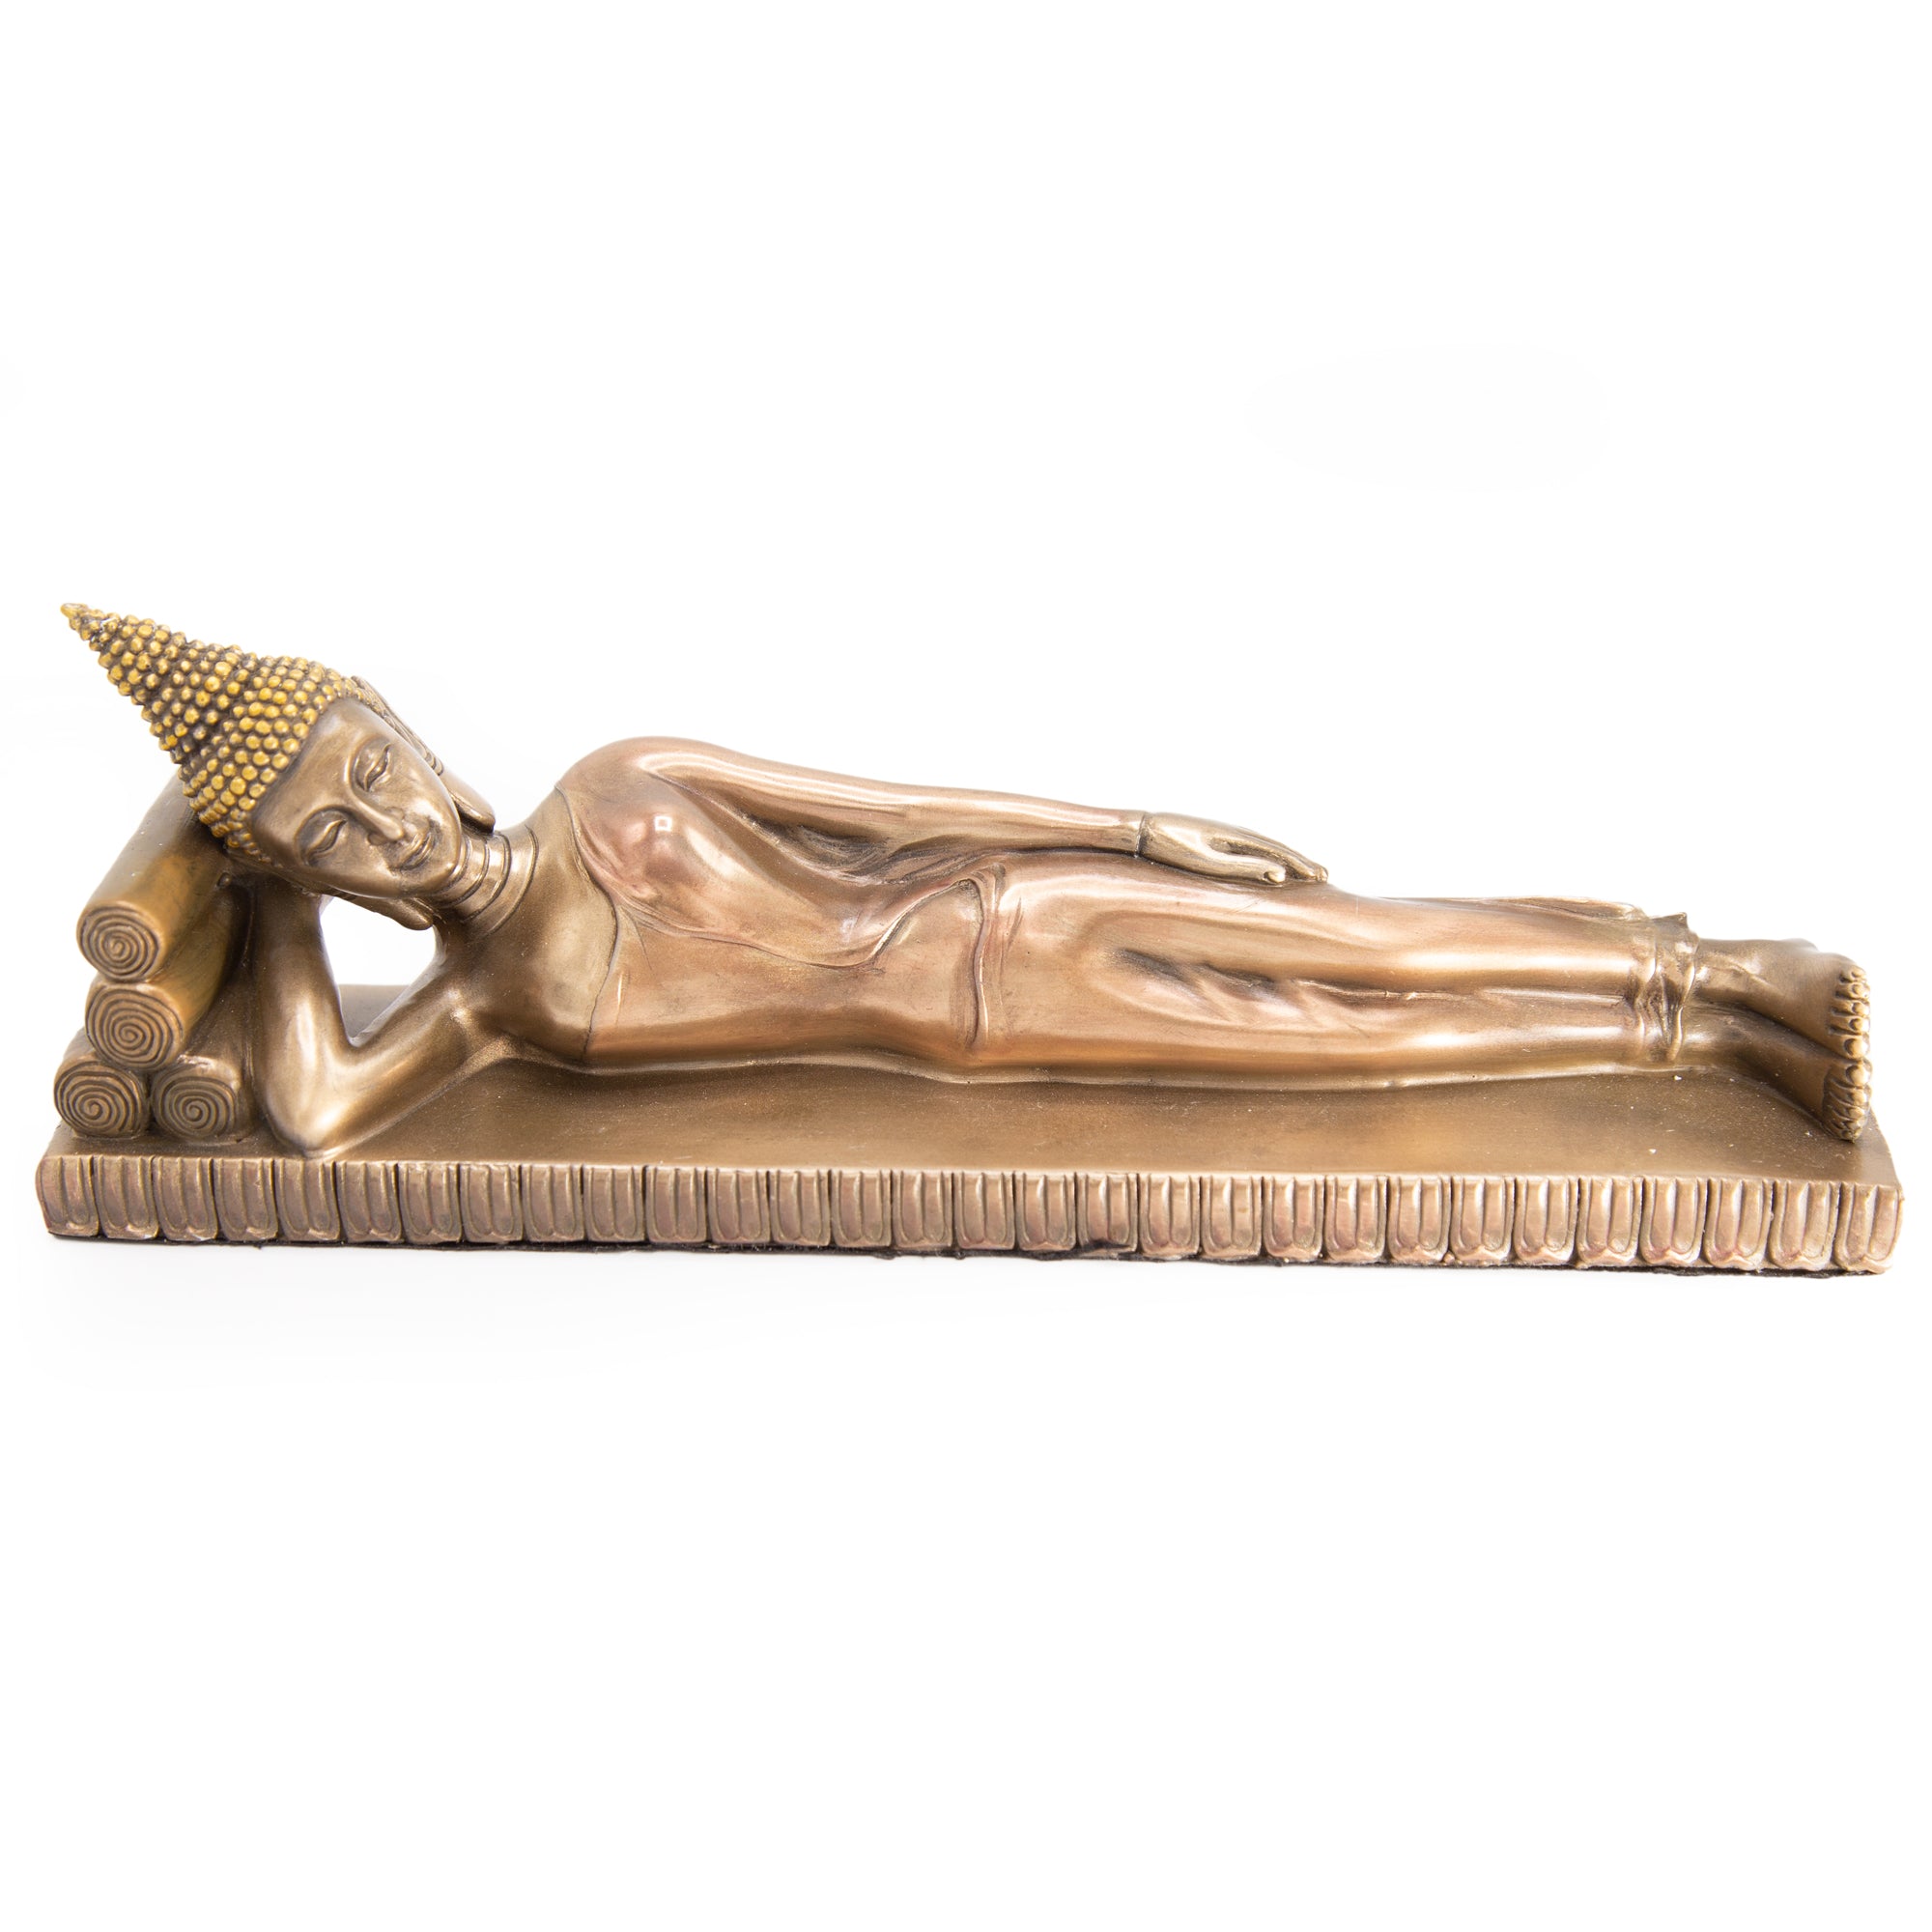 Sleeping Buddha Cast Resin Statue